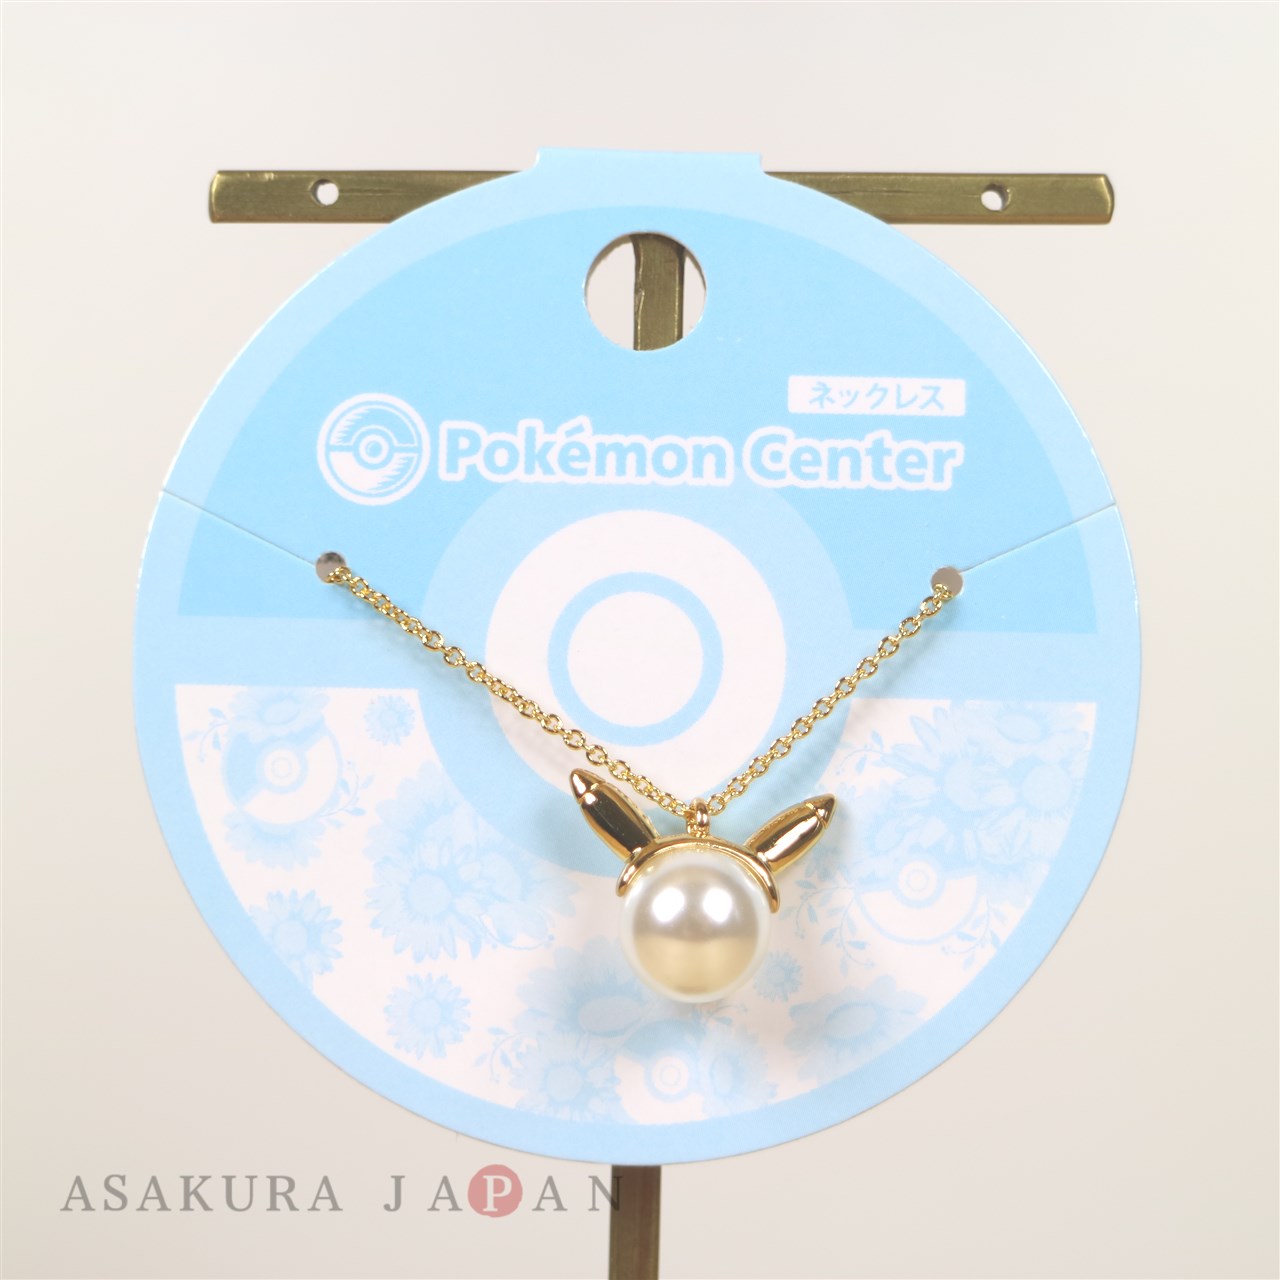 Details about   Pokemon Center Pokemon accessory Series Necklace N1 Pikachu 